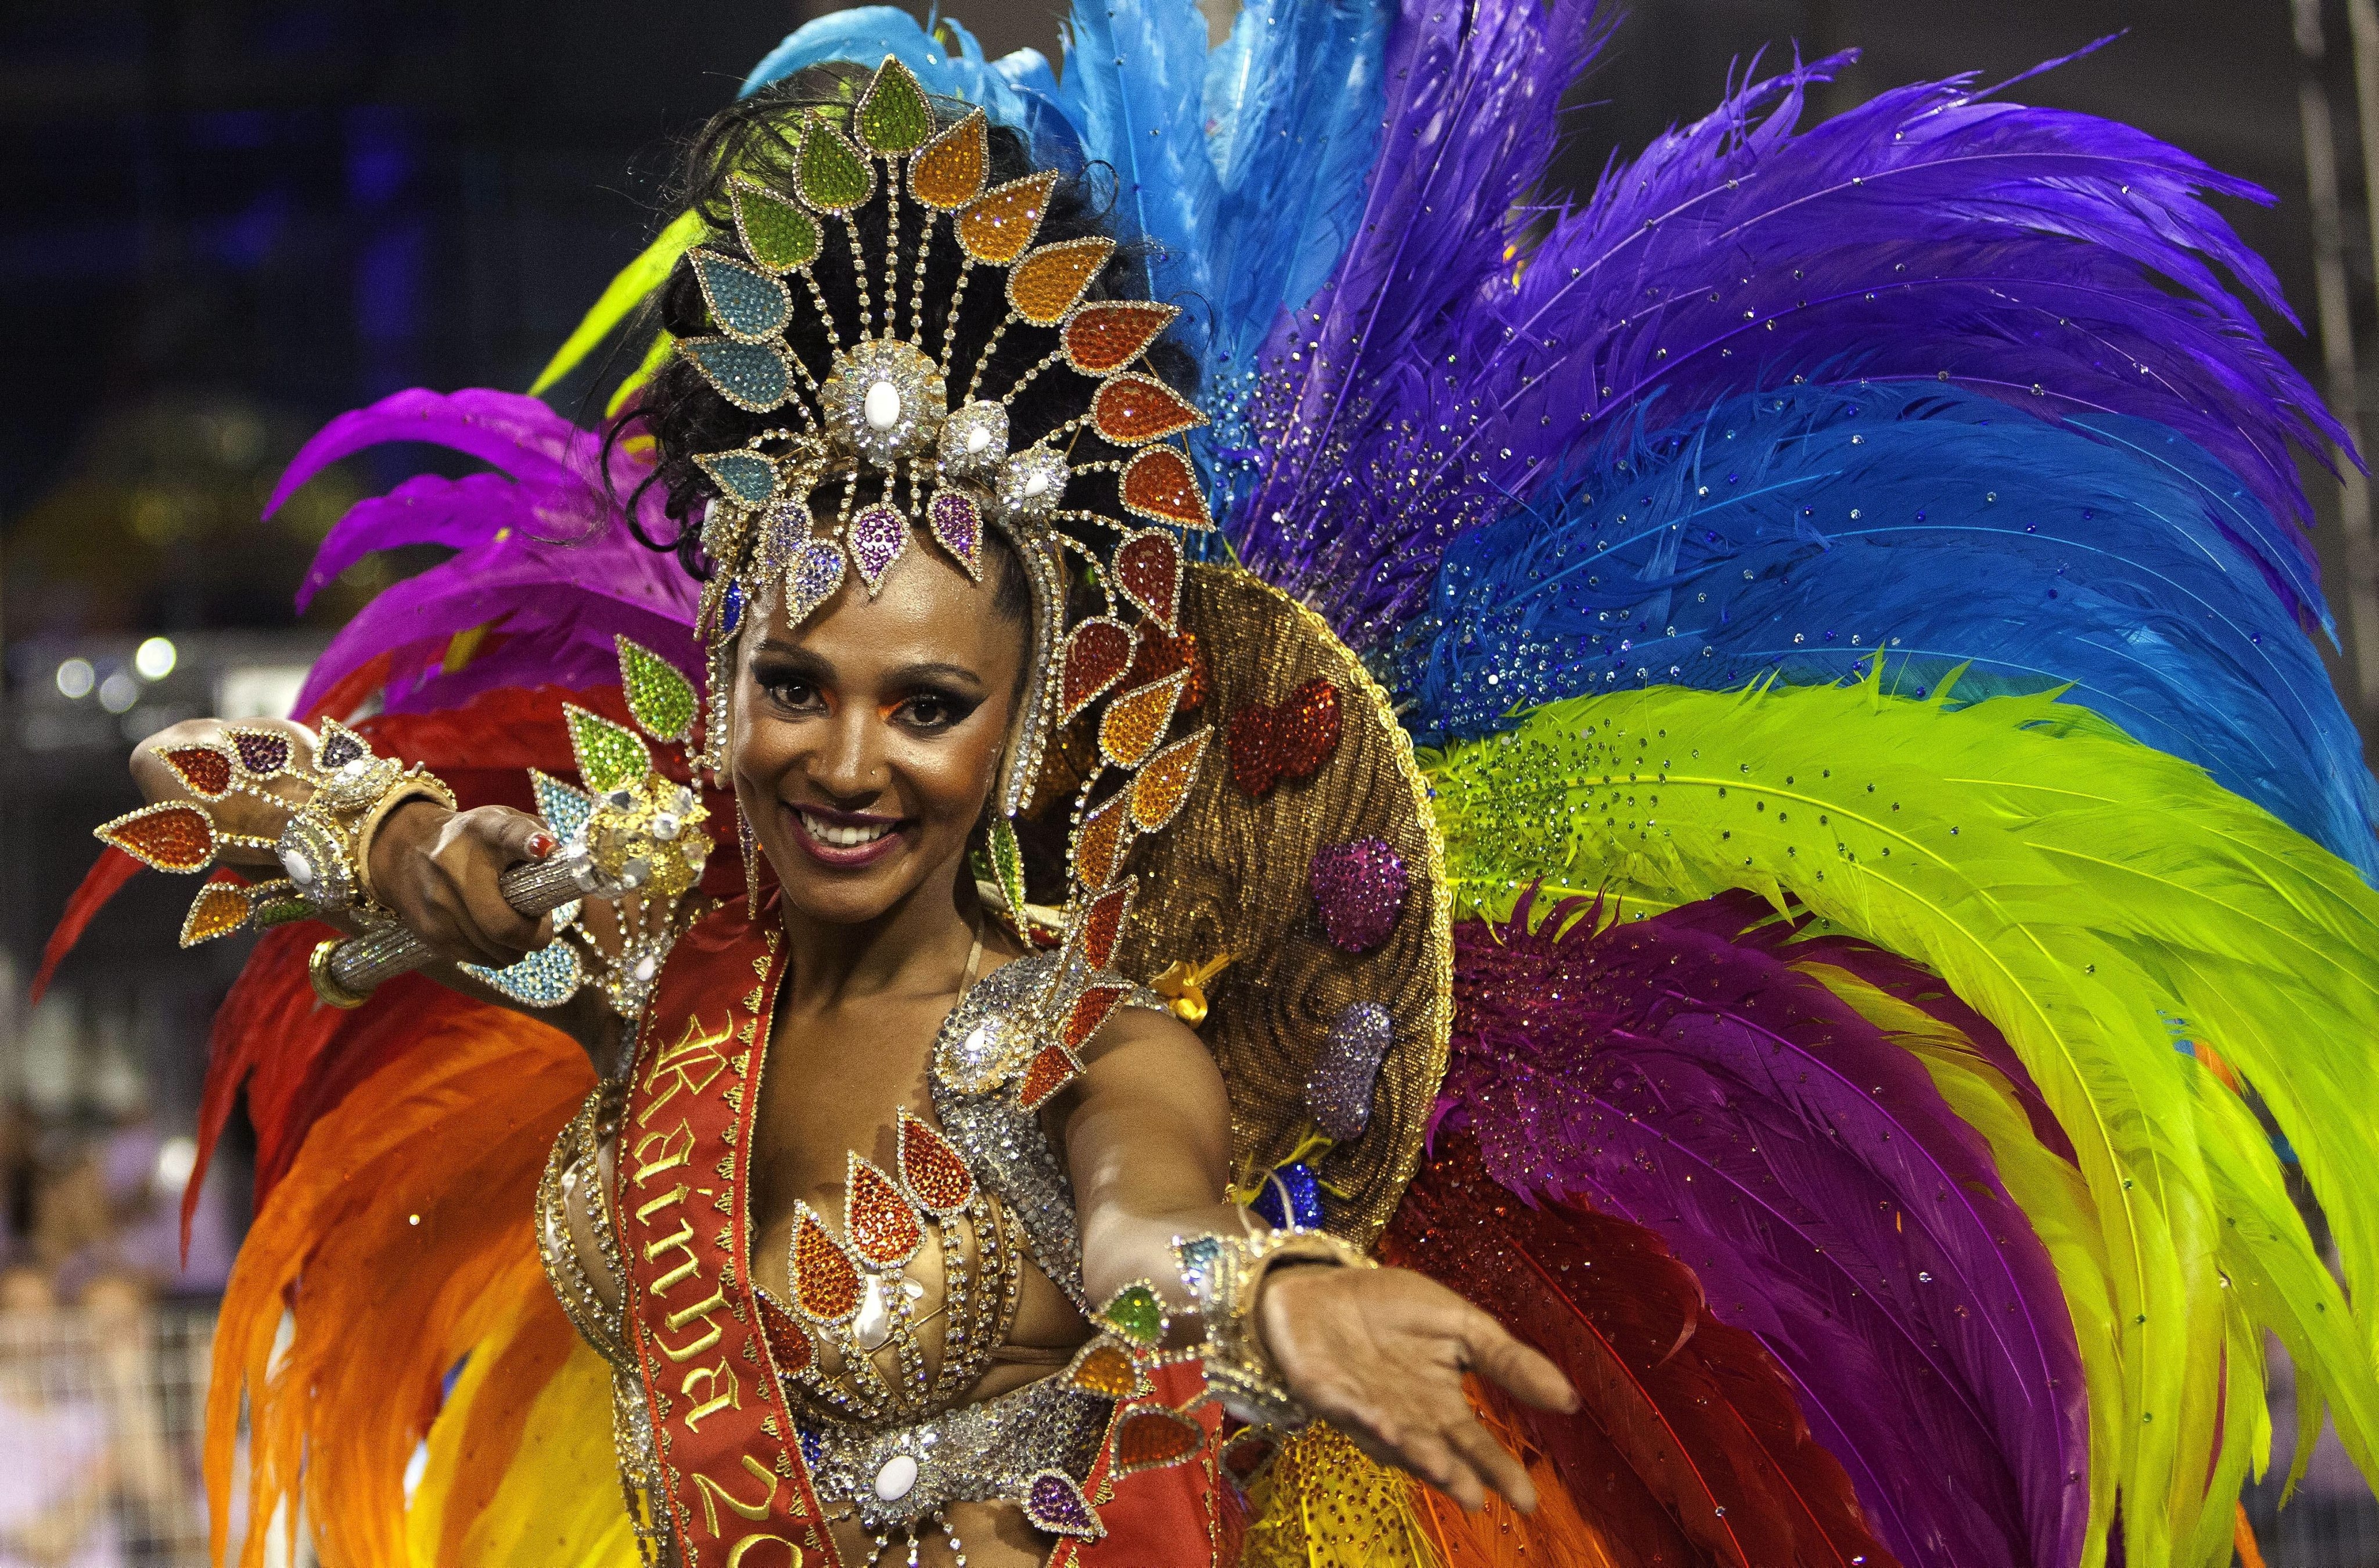 Звезды карнавала. Карнавал в Рио-де-Жанейро. Карнавал в Рио-де-Жанейро 2022. Рио-де-Жанейро карнавал костюмы. Карнавал в Рио-де-Жанейро (бразильский карнавал).